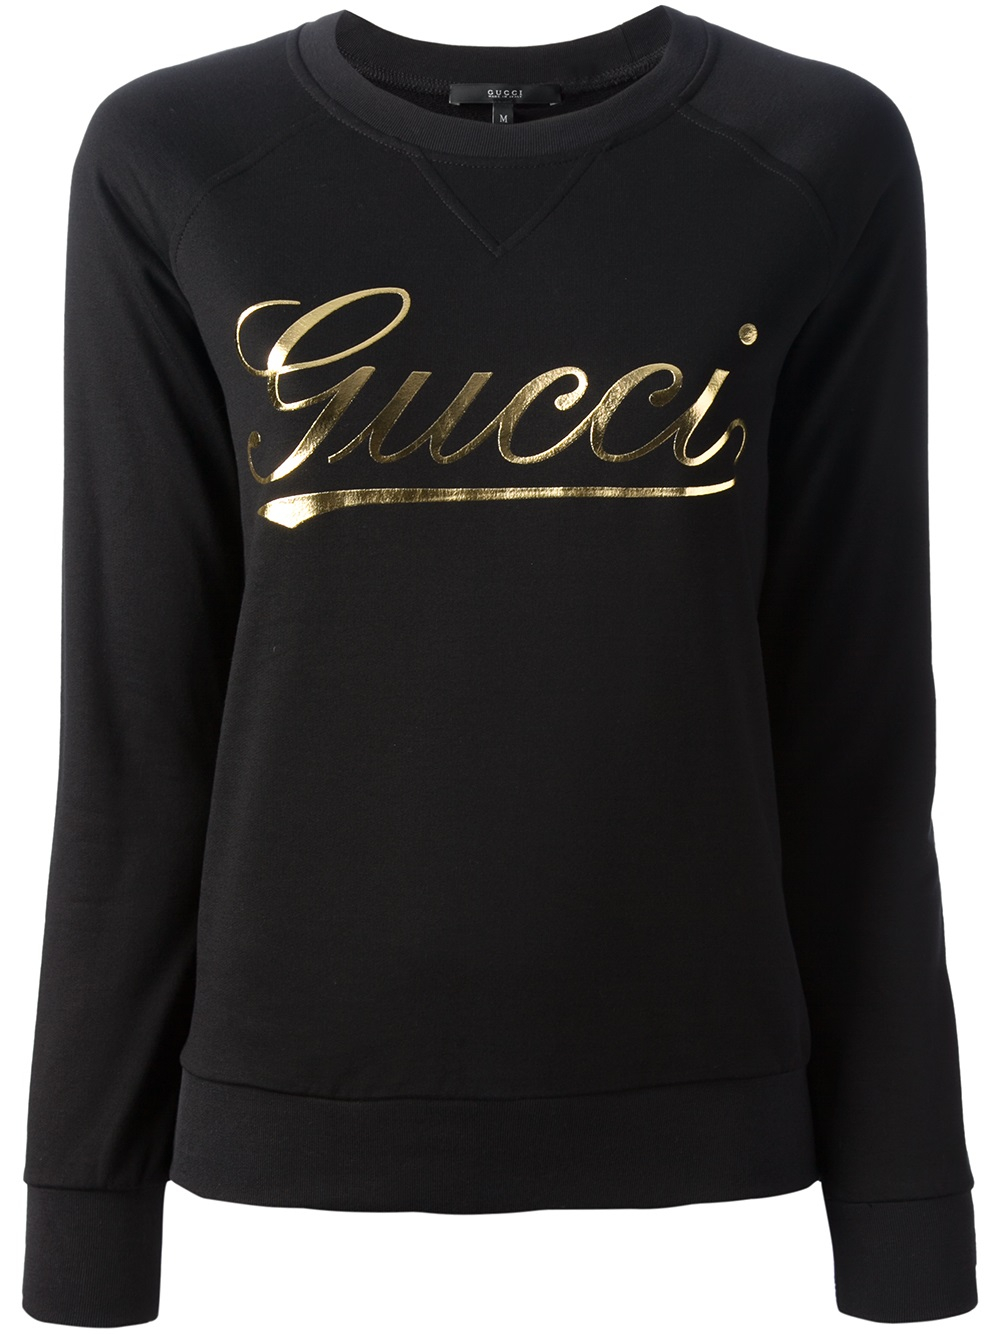 Gucci Brand Print Sweater in Black - Lyst